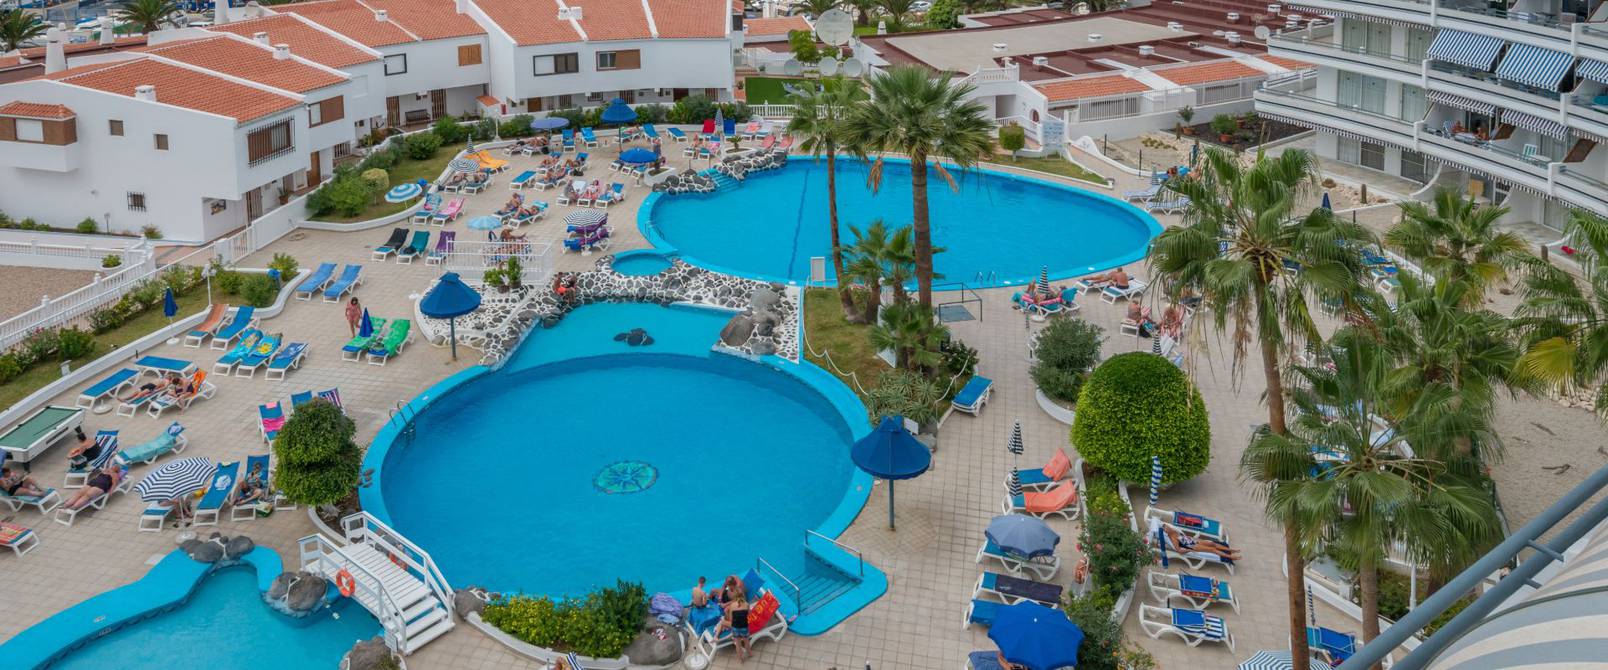 Have fun Hotel HOVIMA Atlantis Costa Adeje